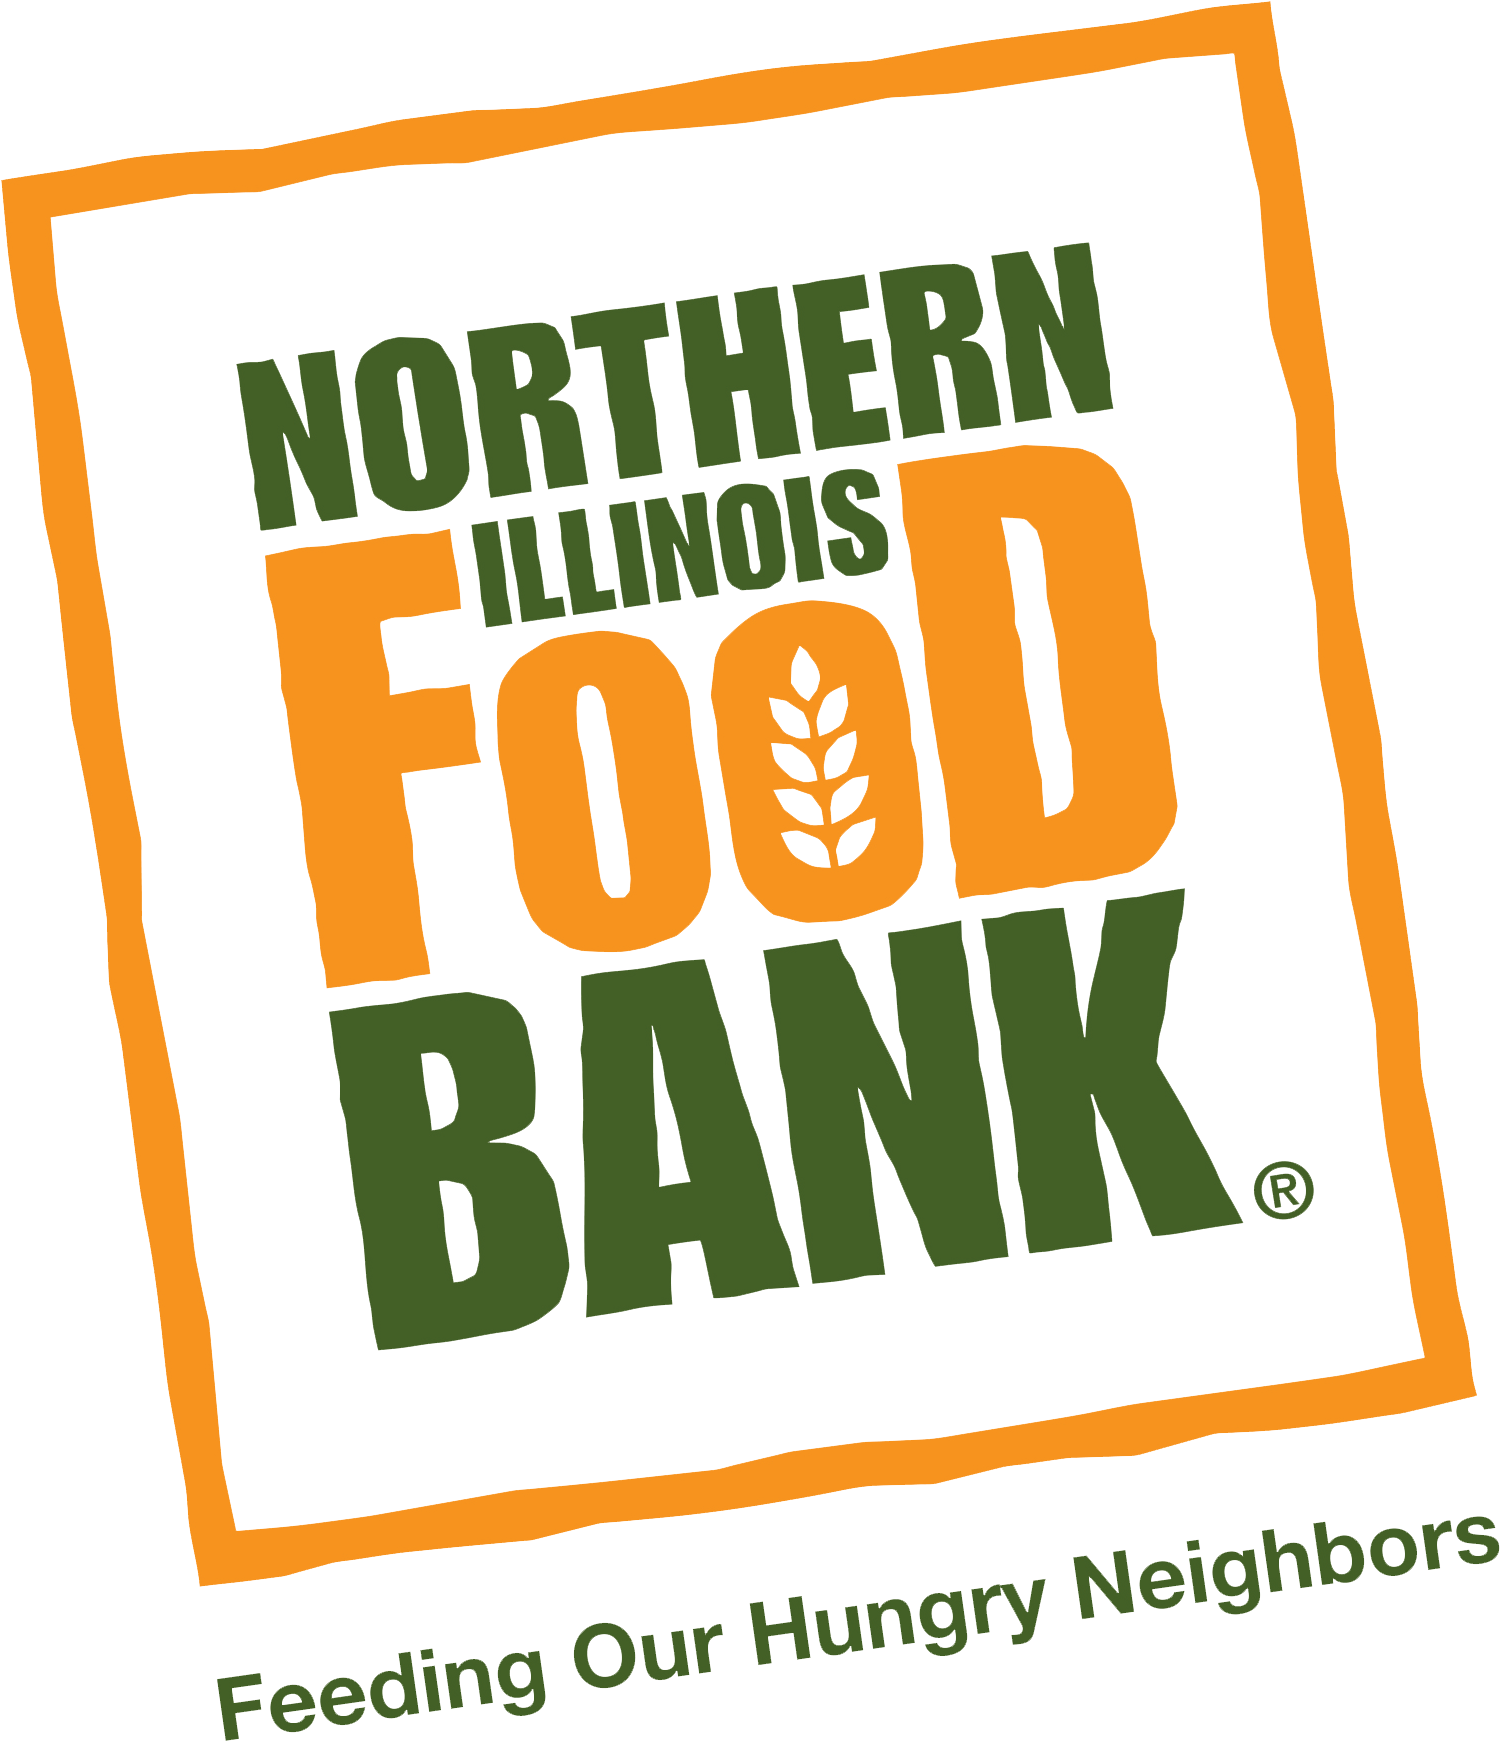 Food Pantry Donations Naugatuck Ecumenical Food Bank - Northern Illinois Food Bank Logo (1764x1956)